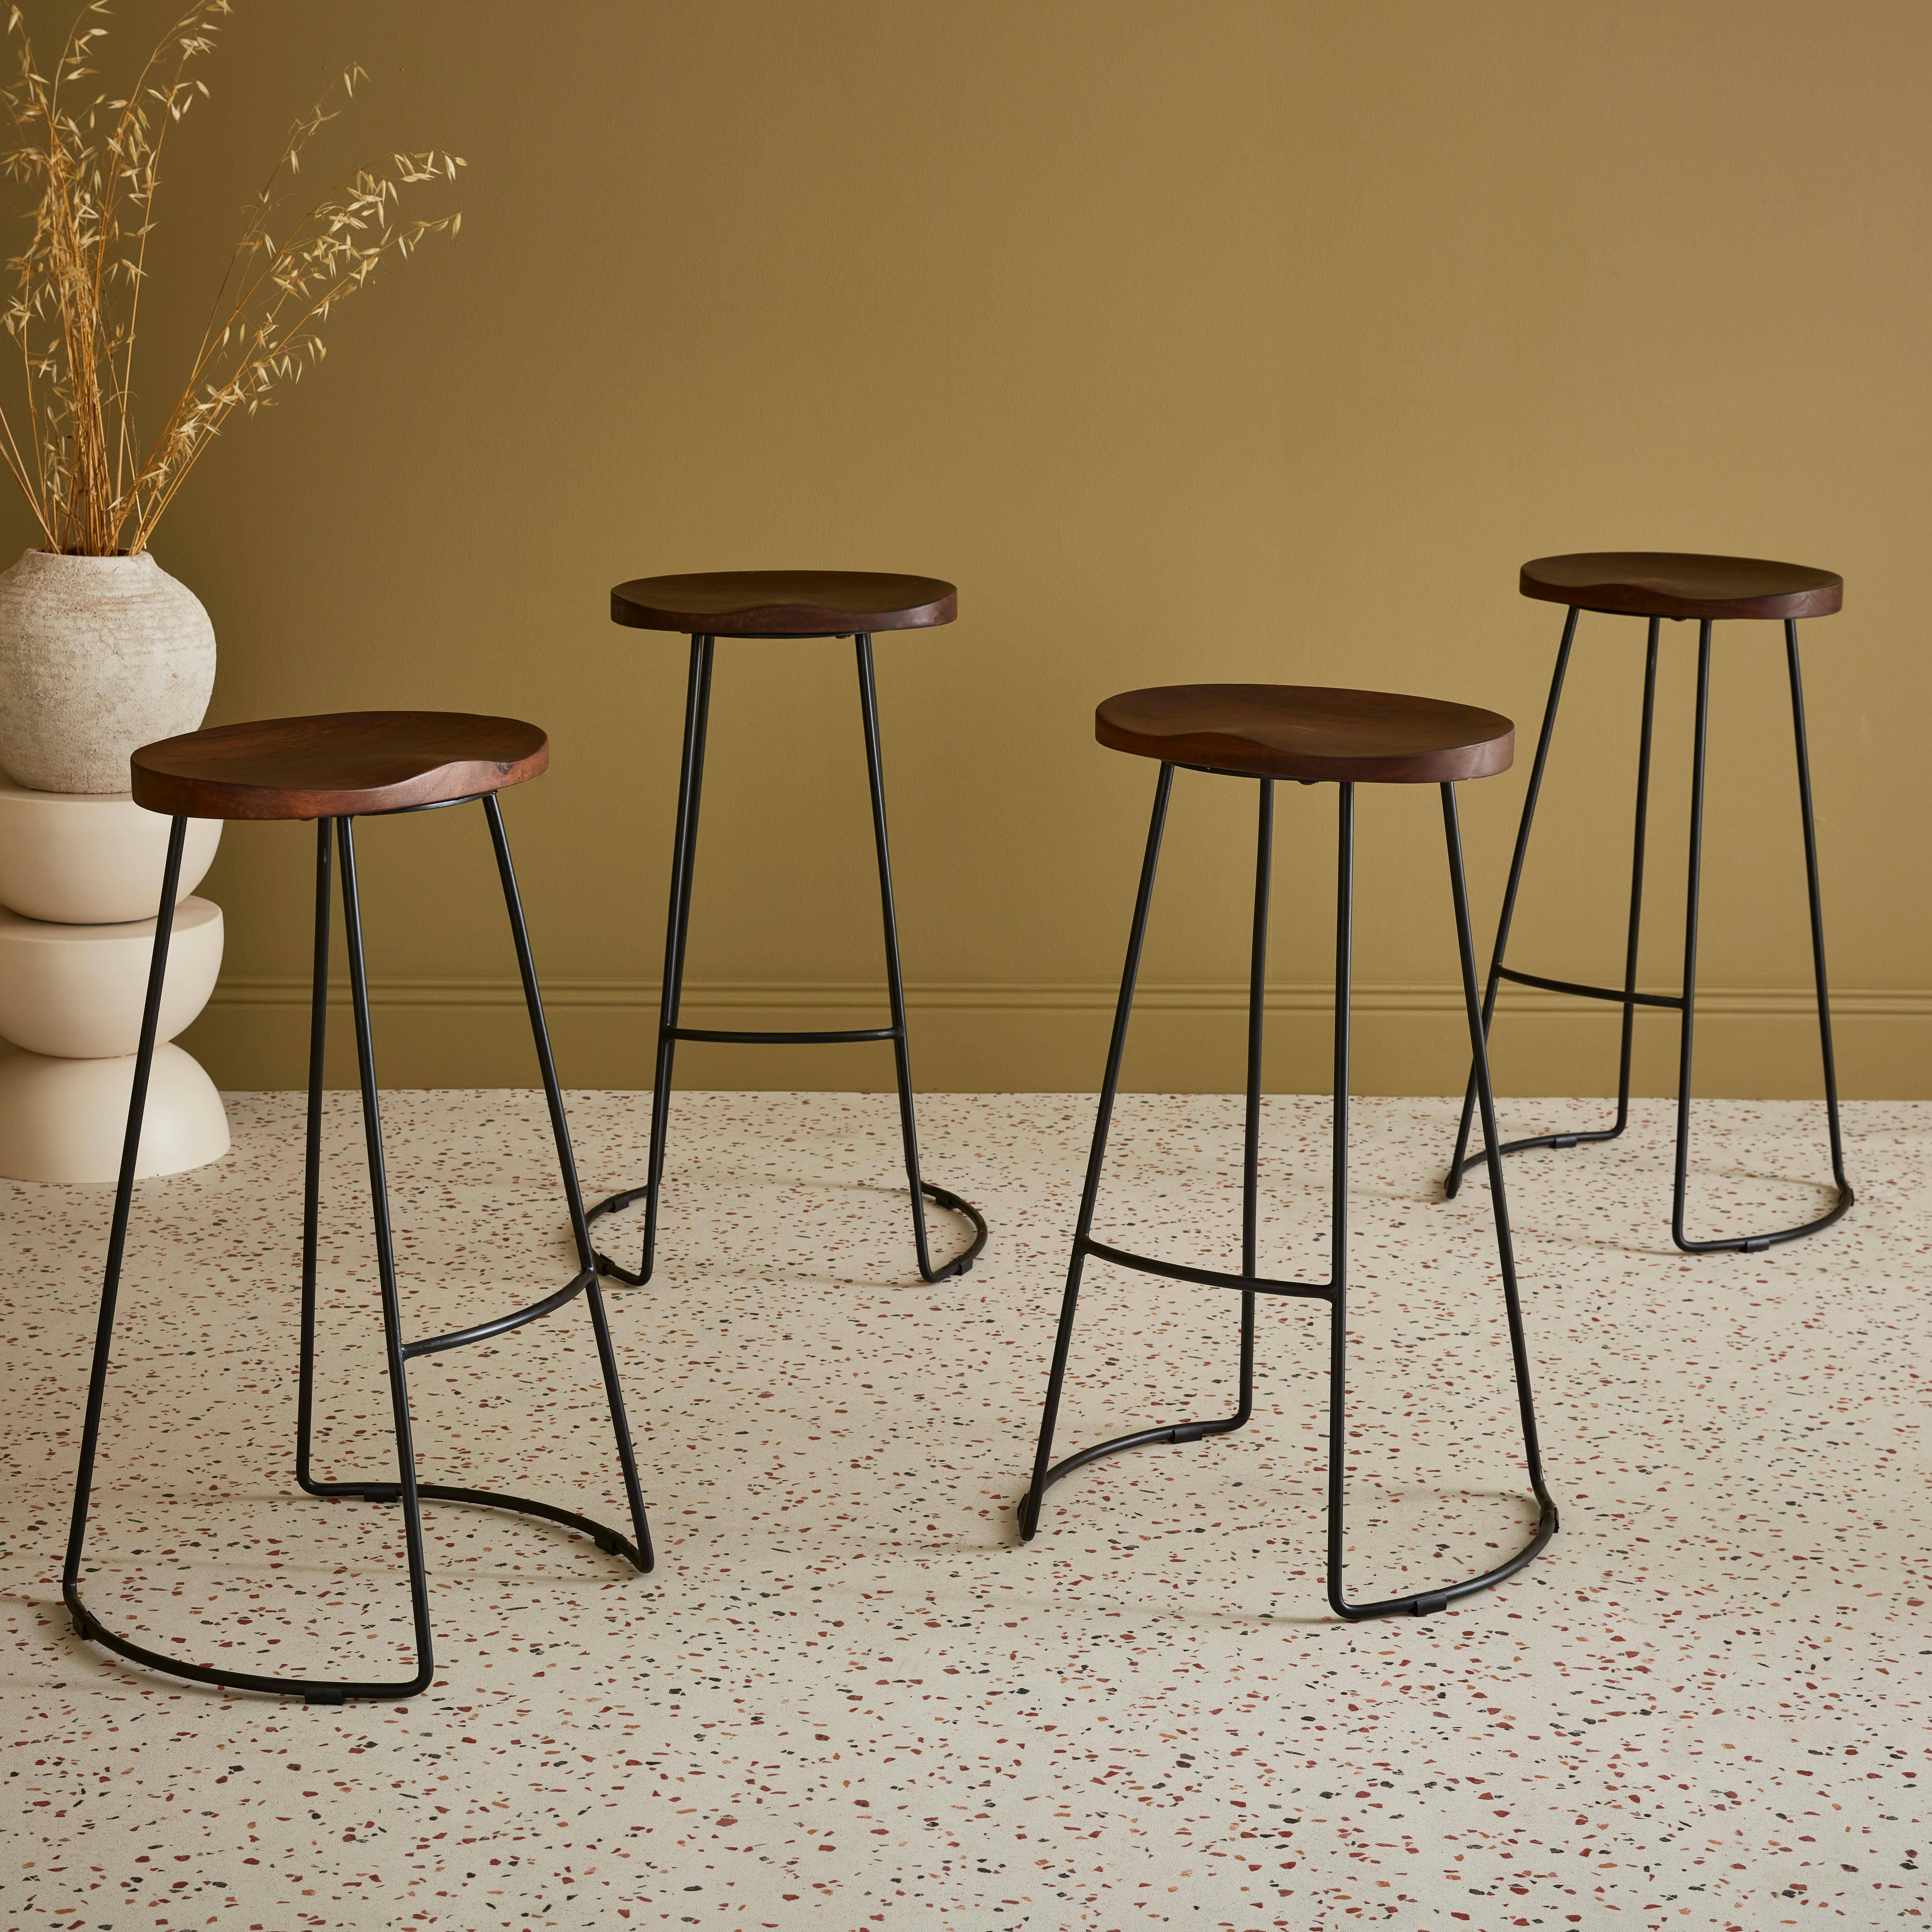 Set of 4 industrial metal and wooden bar stools, 47x40x75cm, Jaya, Light Walnut, Mango wood seat, black metal legs,sweeek,Photo1